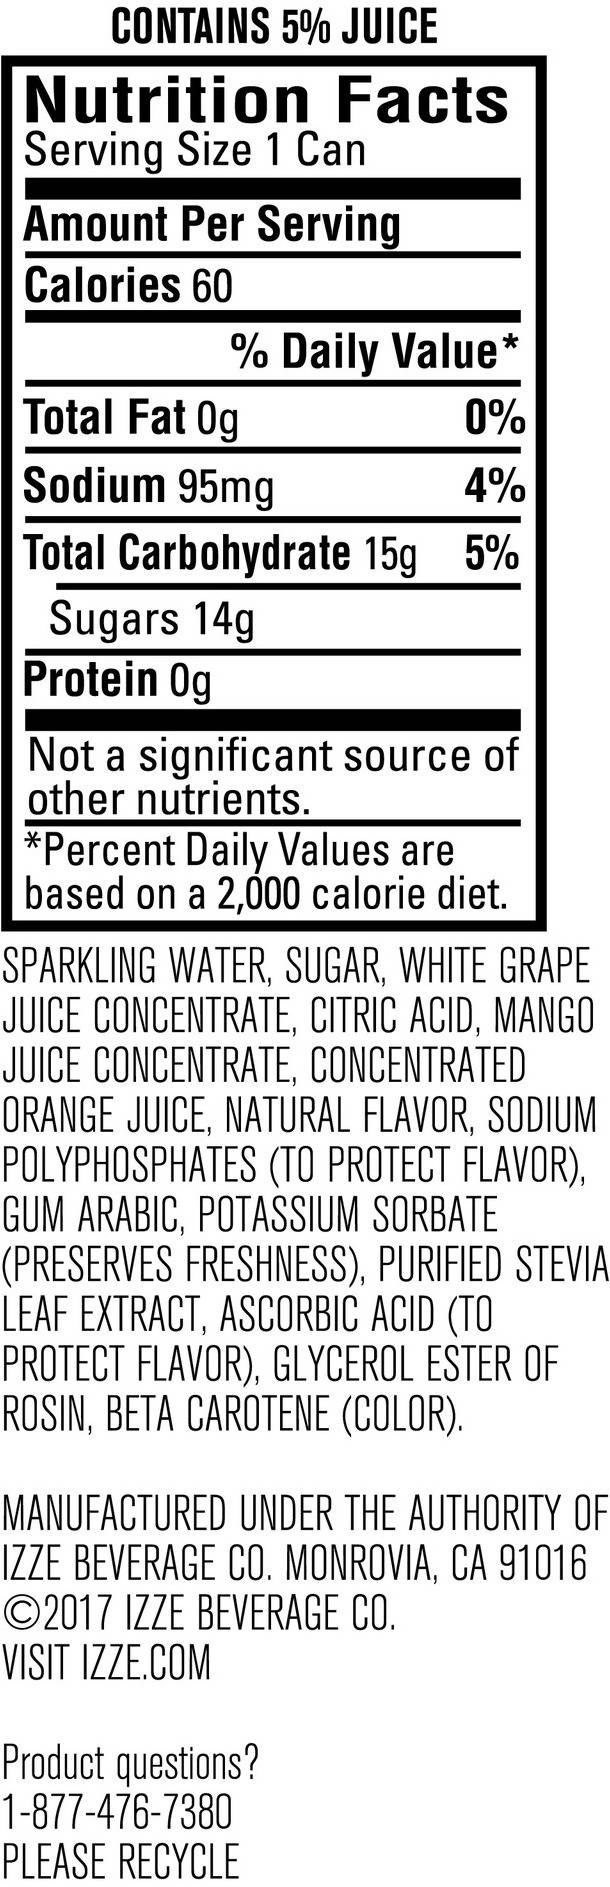 Image describing nutrition information for product IZZE Fusions Orange Mango